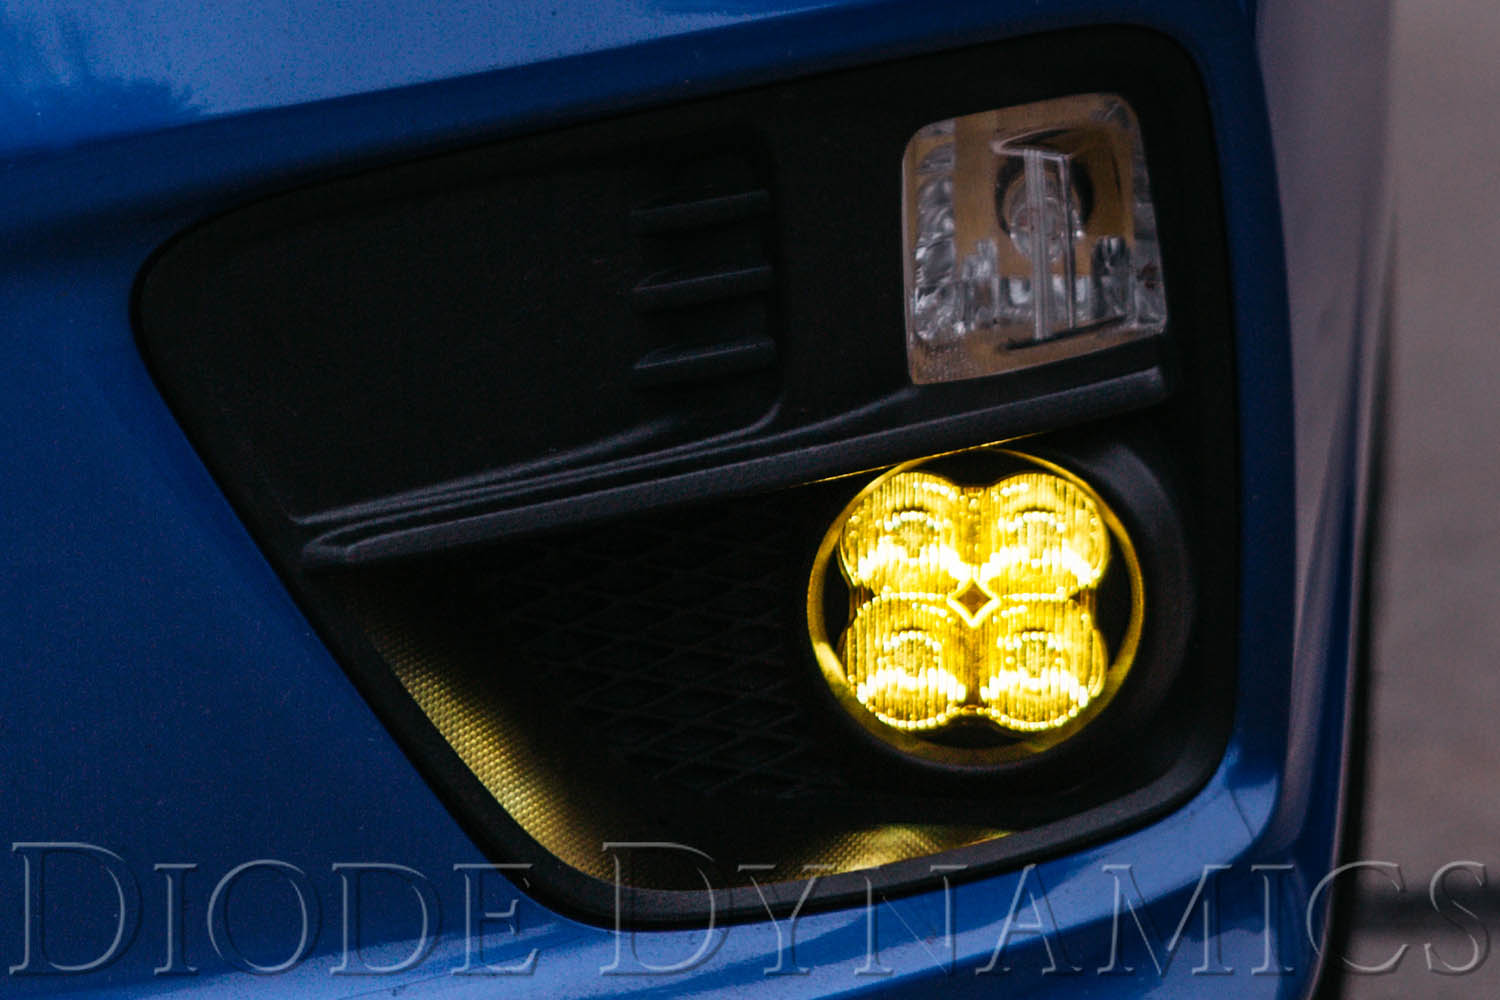 SS3 LED Fog Light Kit for 2010-2018 Acura RDX Yellow SAE Fog Pro Diode Dynamics